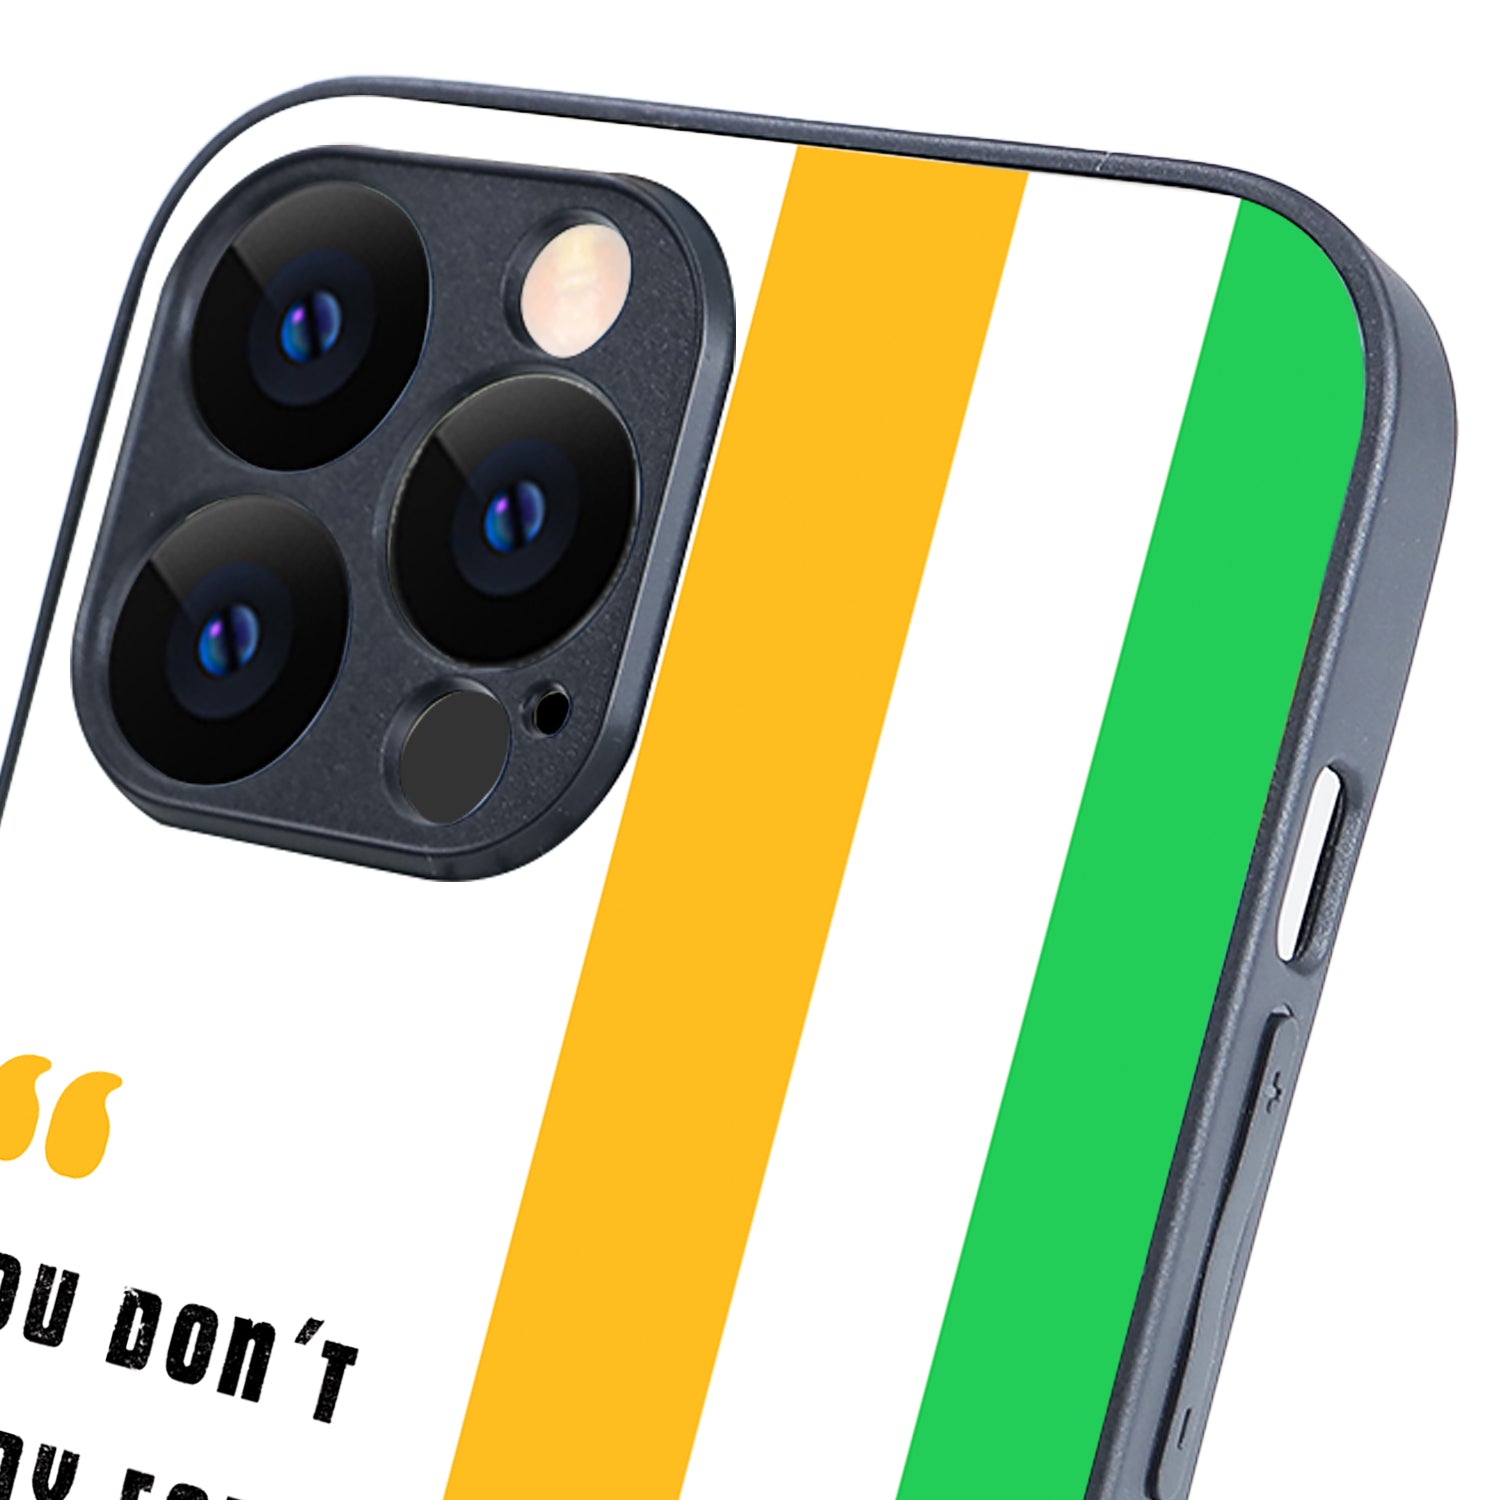 Dhoni Sports iPhone 13 Pro Max Case